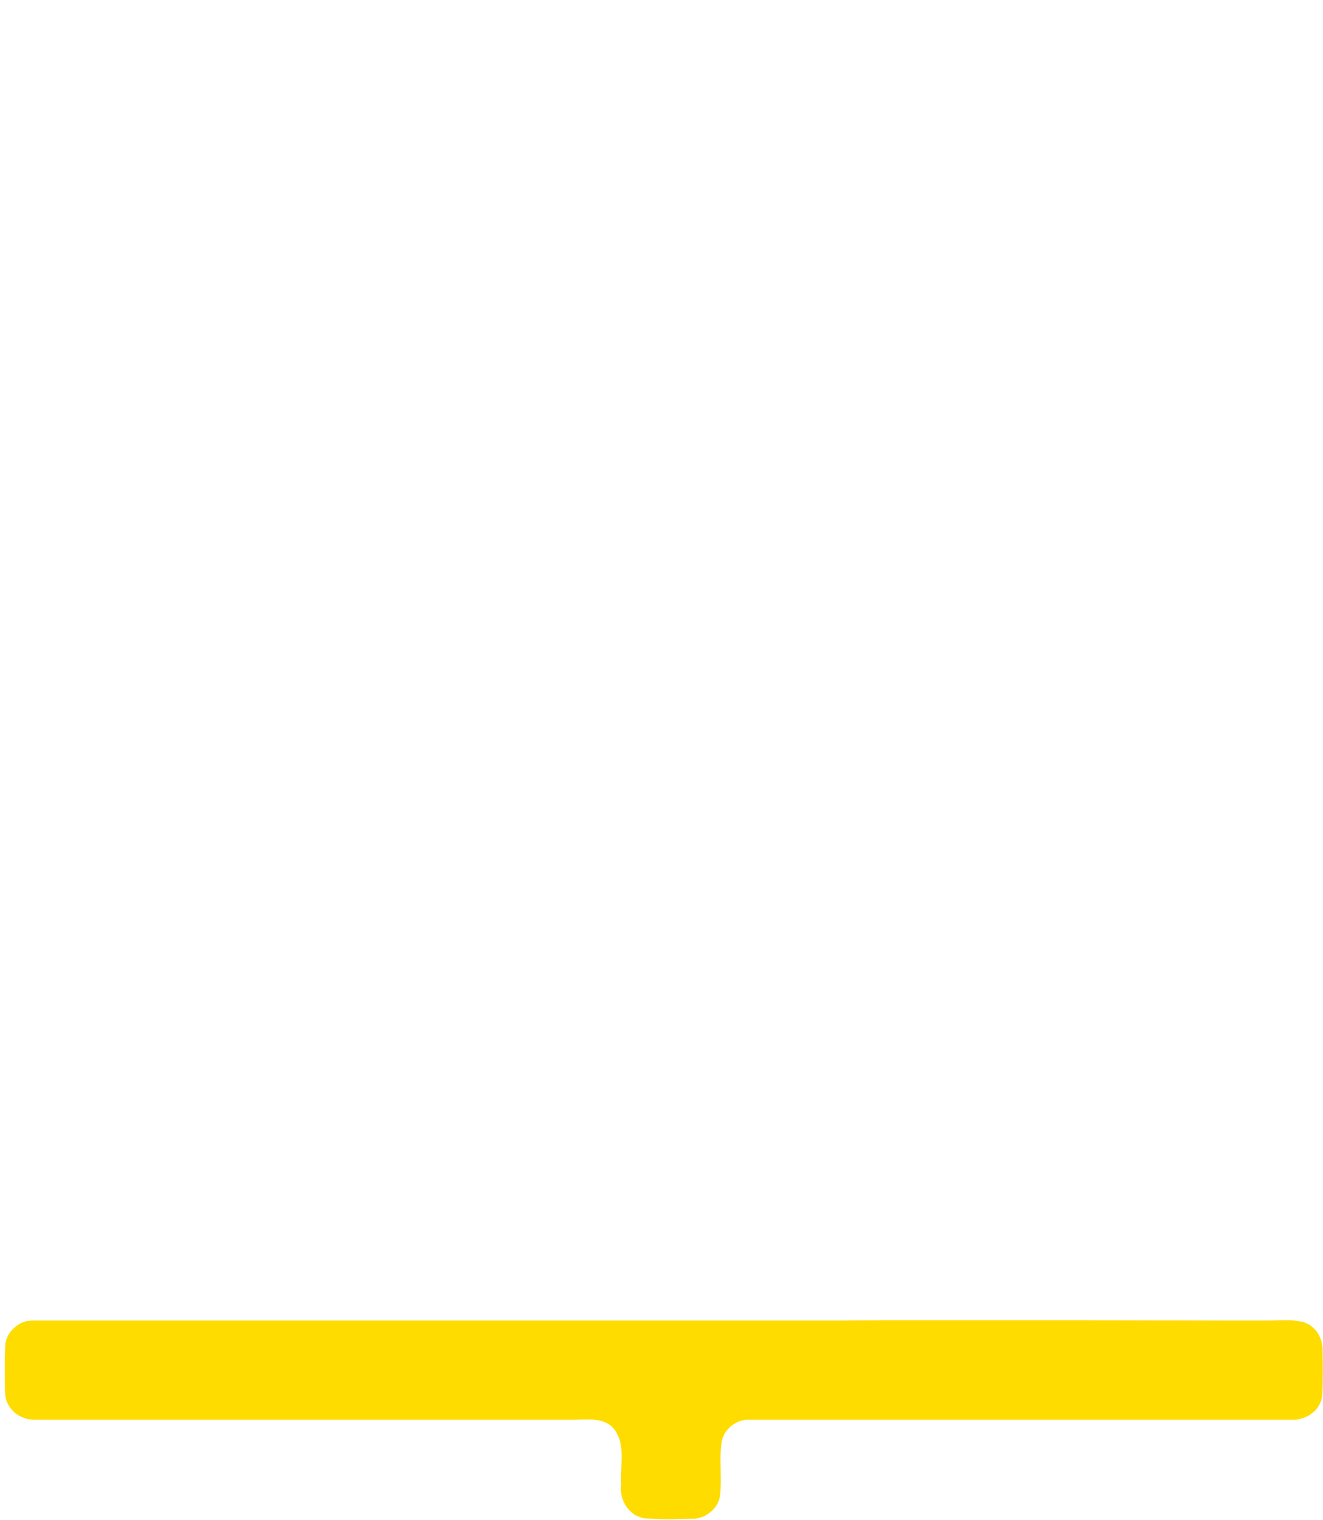 Unite Group (Unite Students) logo for dark backgrounds (transparent PNG)